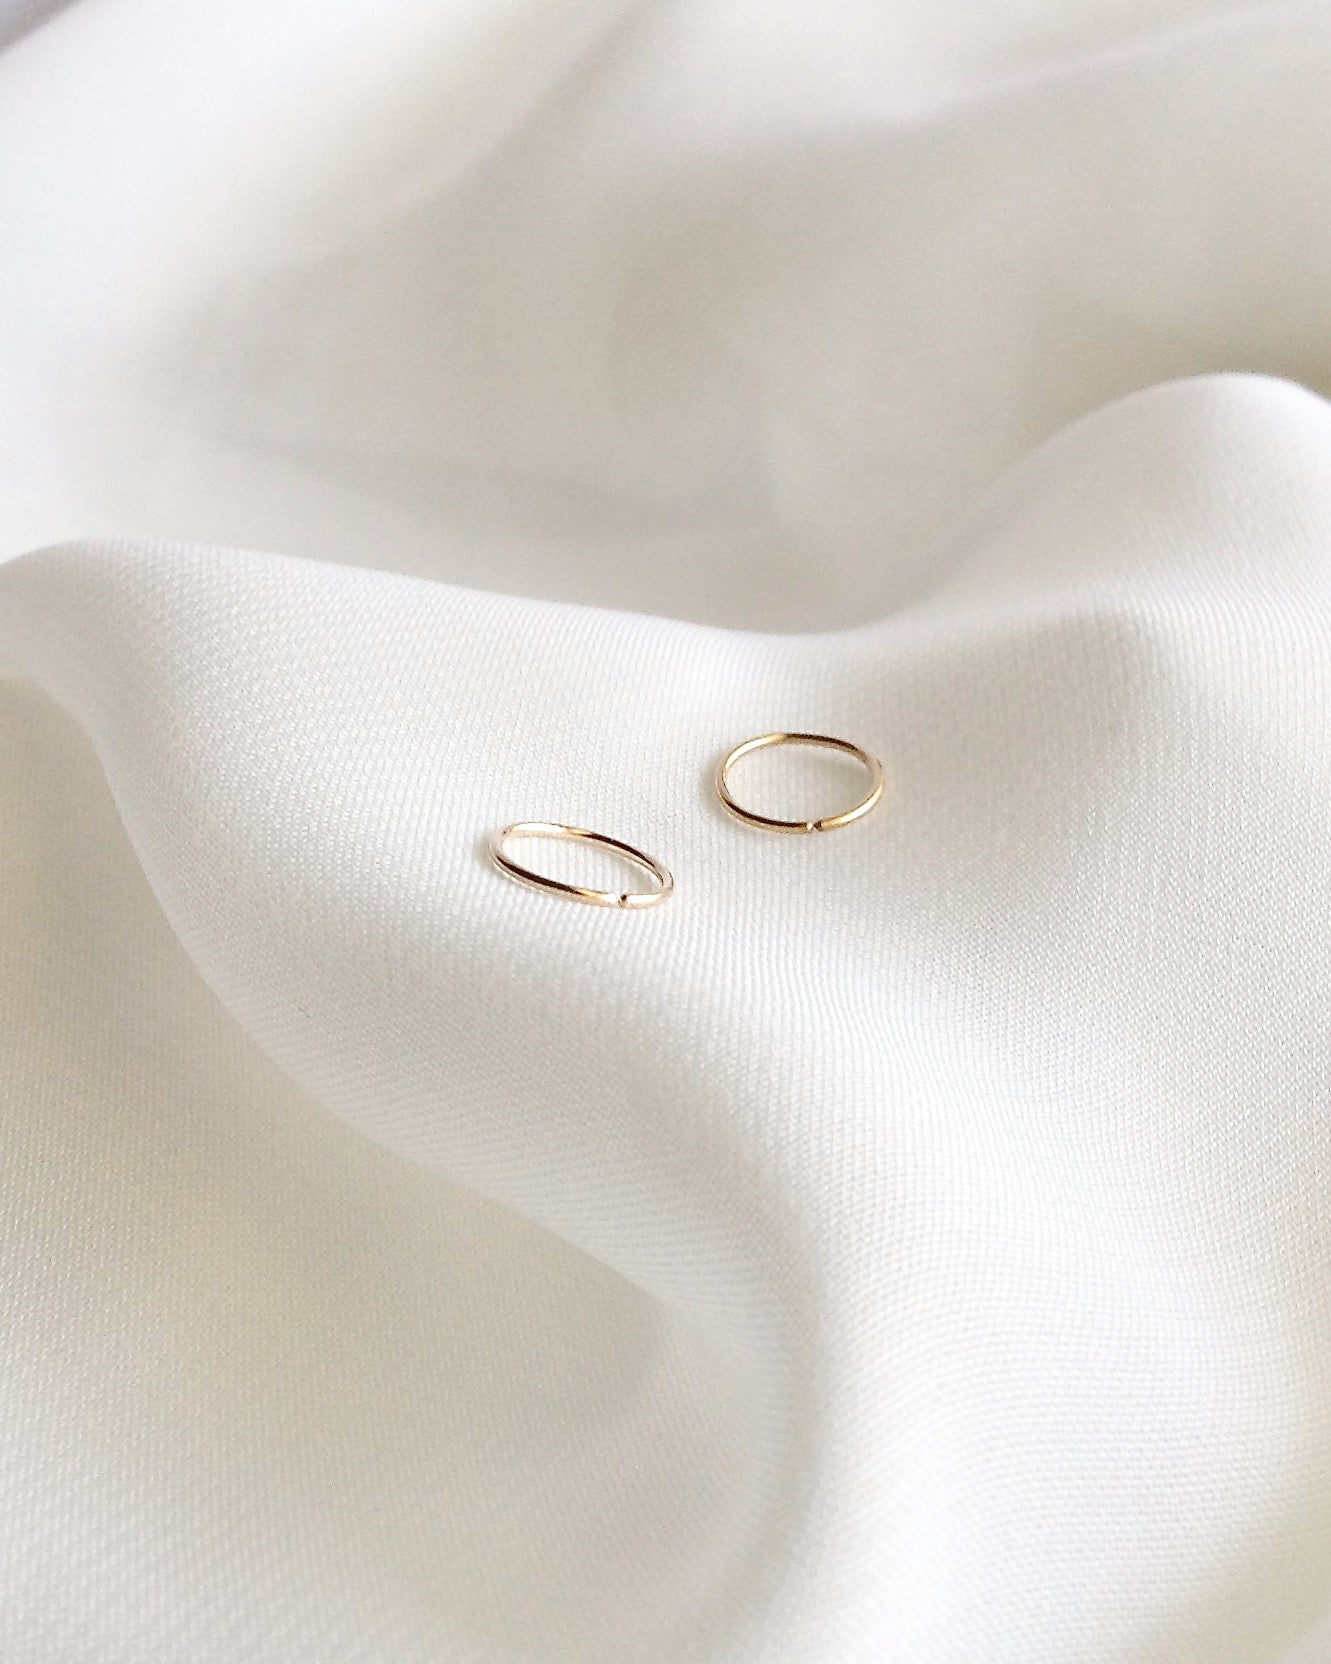 Mini Hugging Hoop Earrings | Mini Huggie Earrings in Sterling Silver Gold Filled or Rose Gold Filled| IB Jewelry